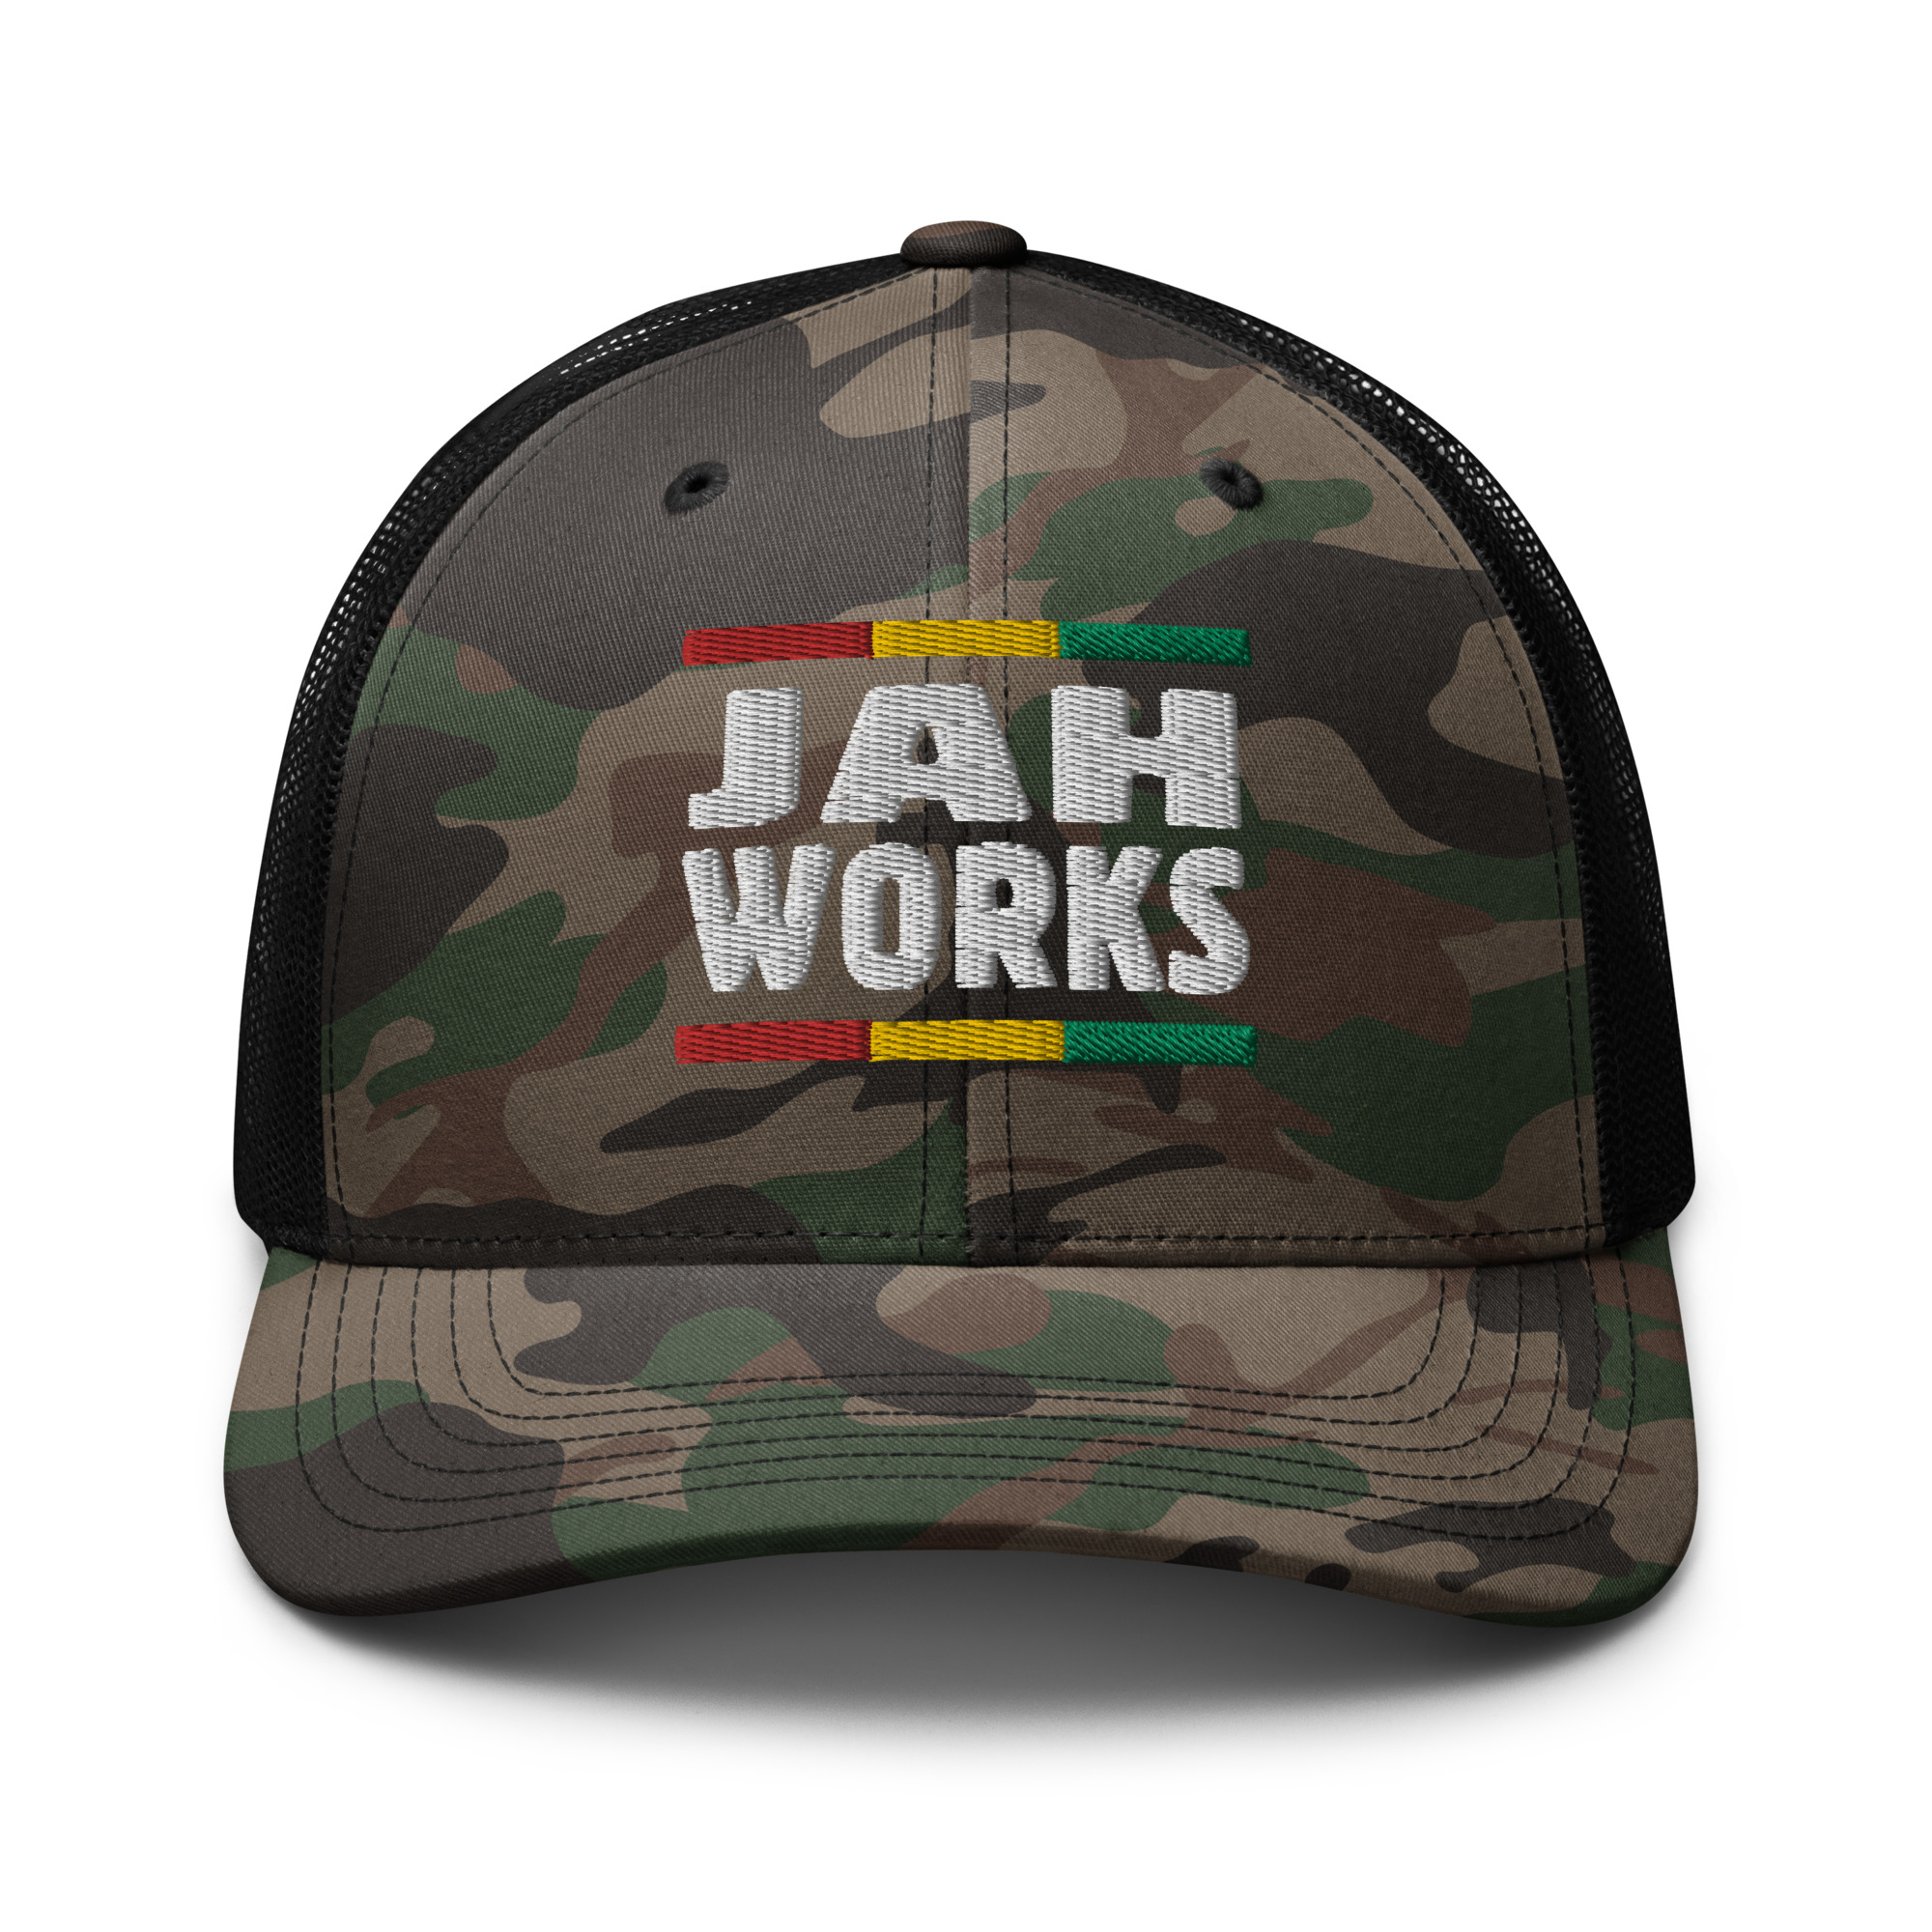 Jah Works หมวก Trucker ลายพราง